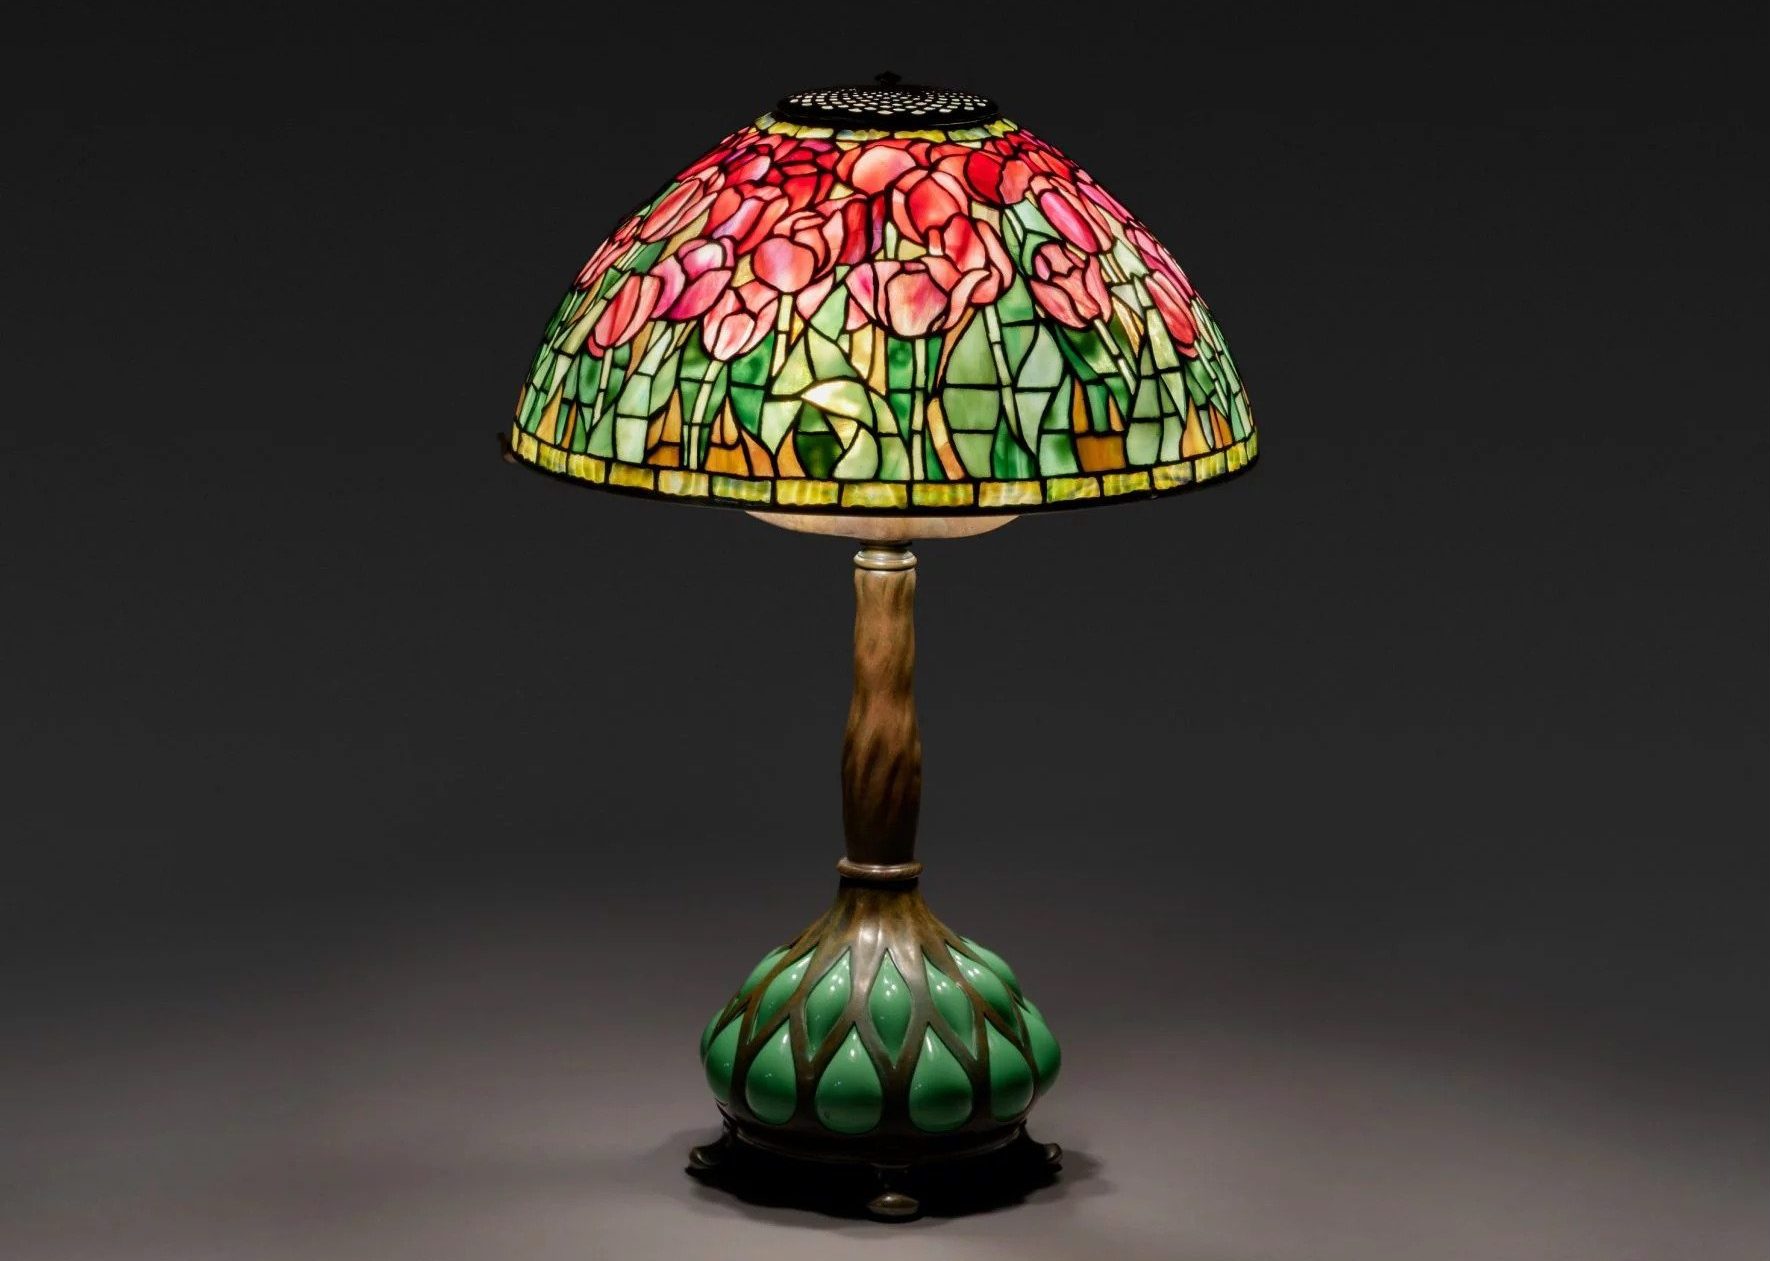 Geruststellen 鍔 kiespijn Tiffany Glass and Art Nouveau Movement | DailyArt Magazine